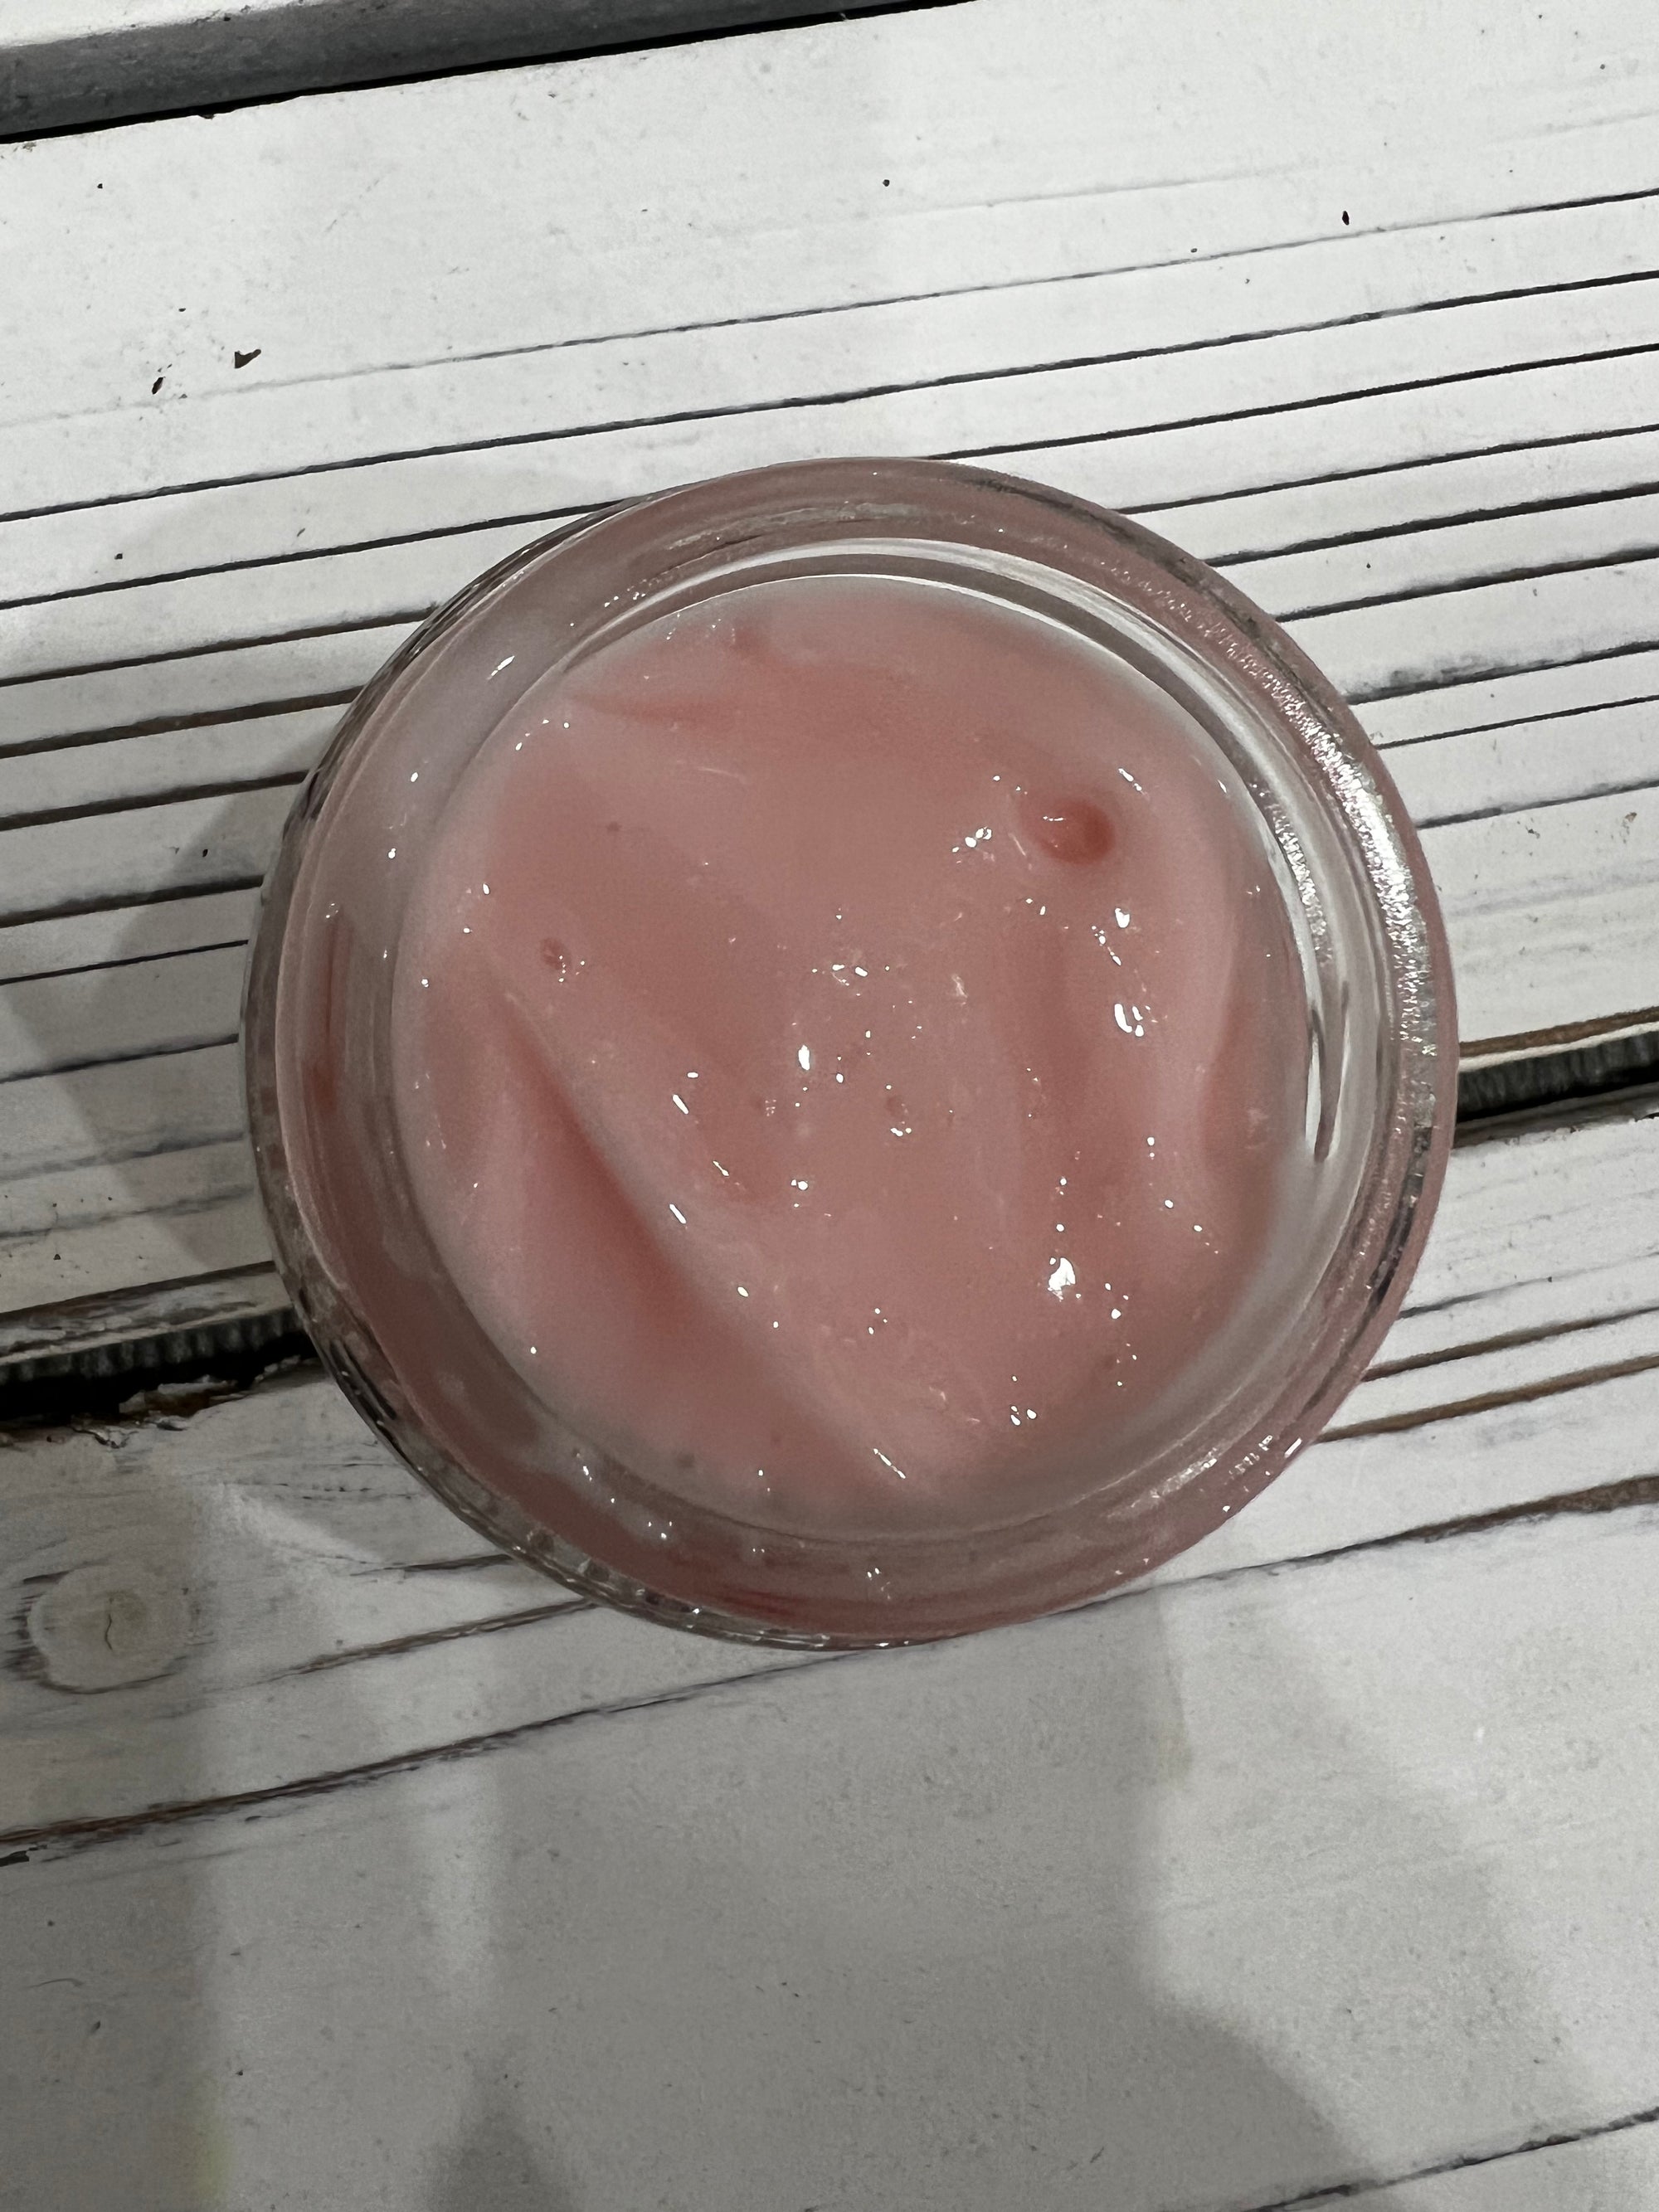 Introducing the Hydro Fruit Acid Clarity Cream